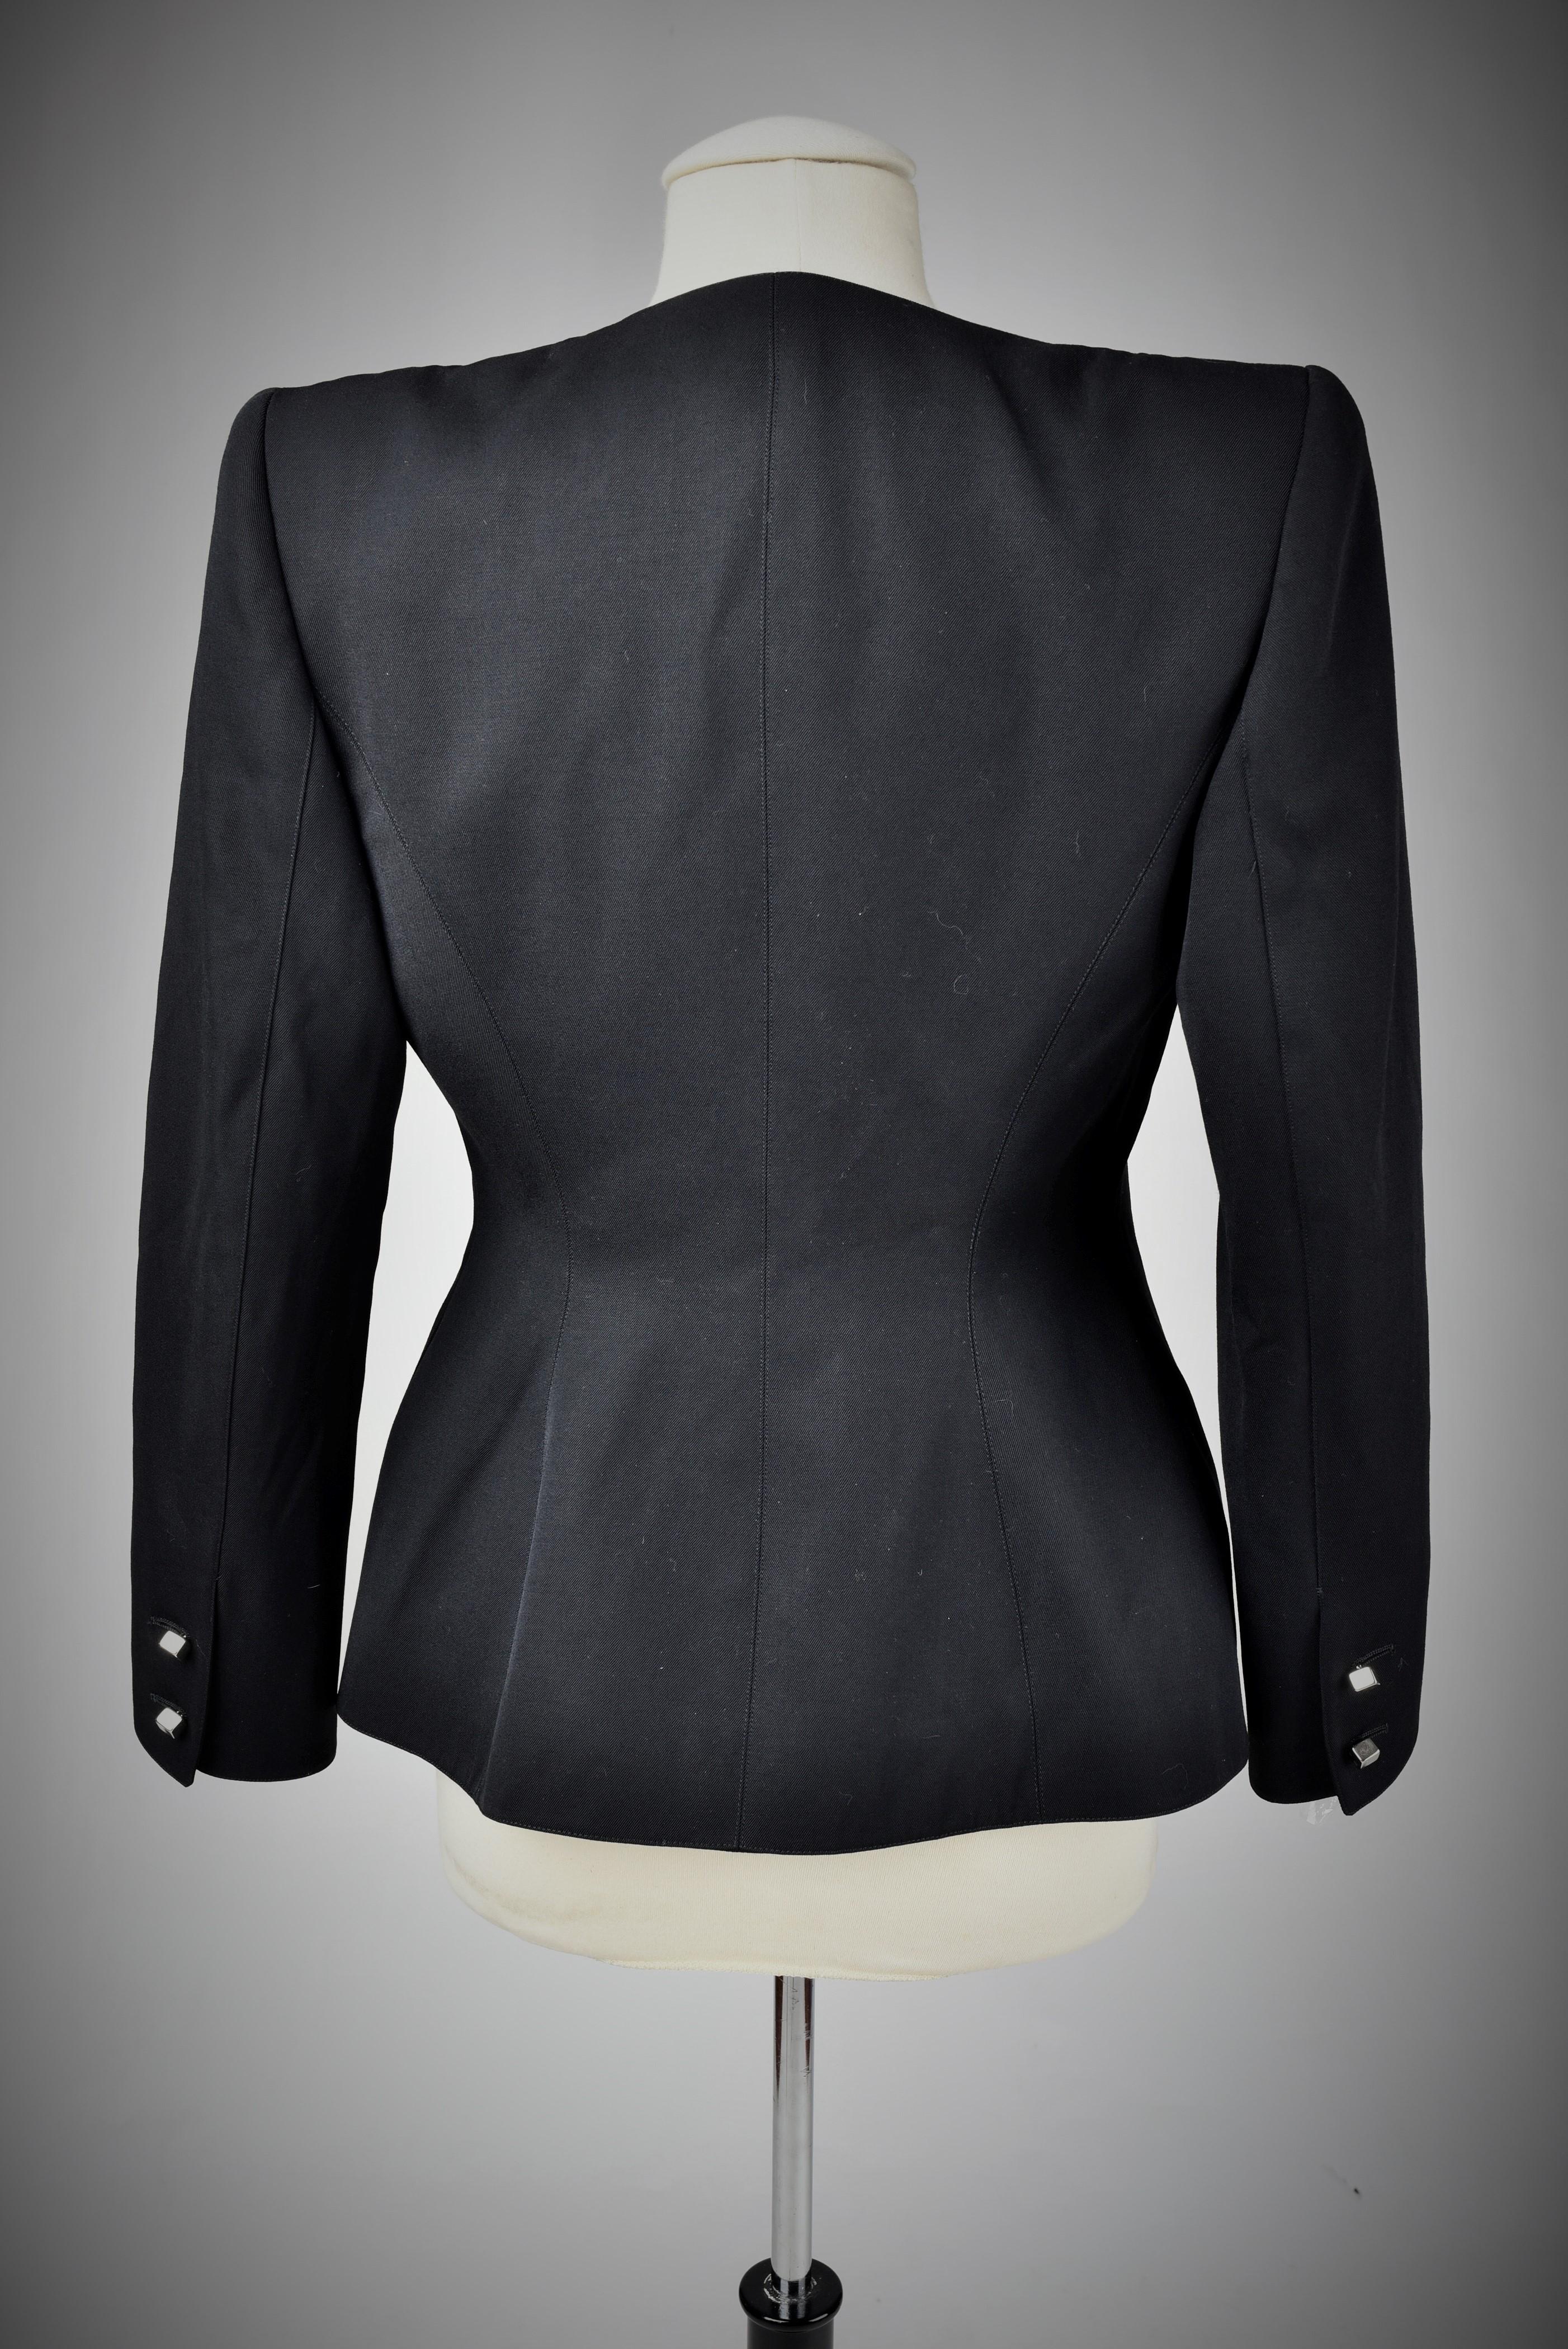 Black Tergal Tuxedo Jacket by Claude Montana Circa 1990 For Sale 6